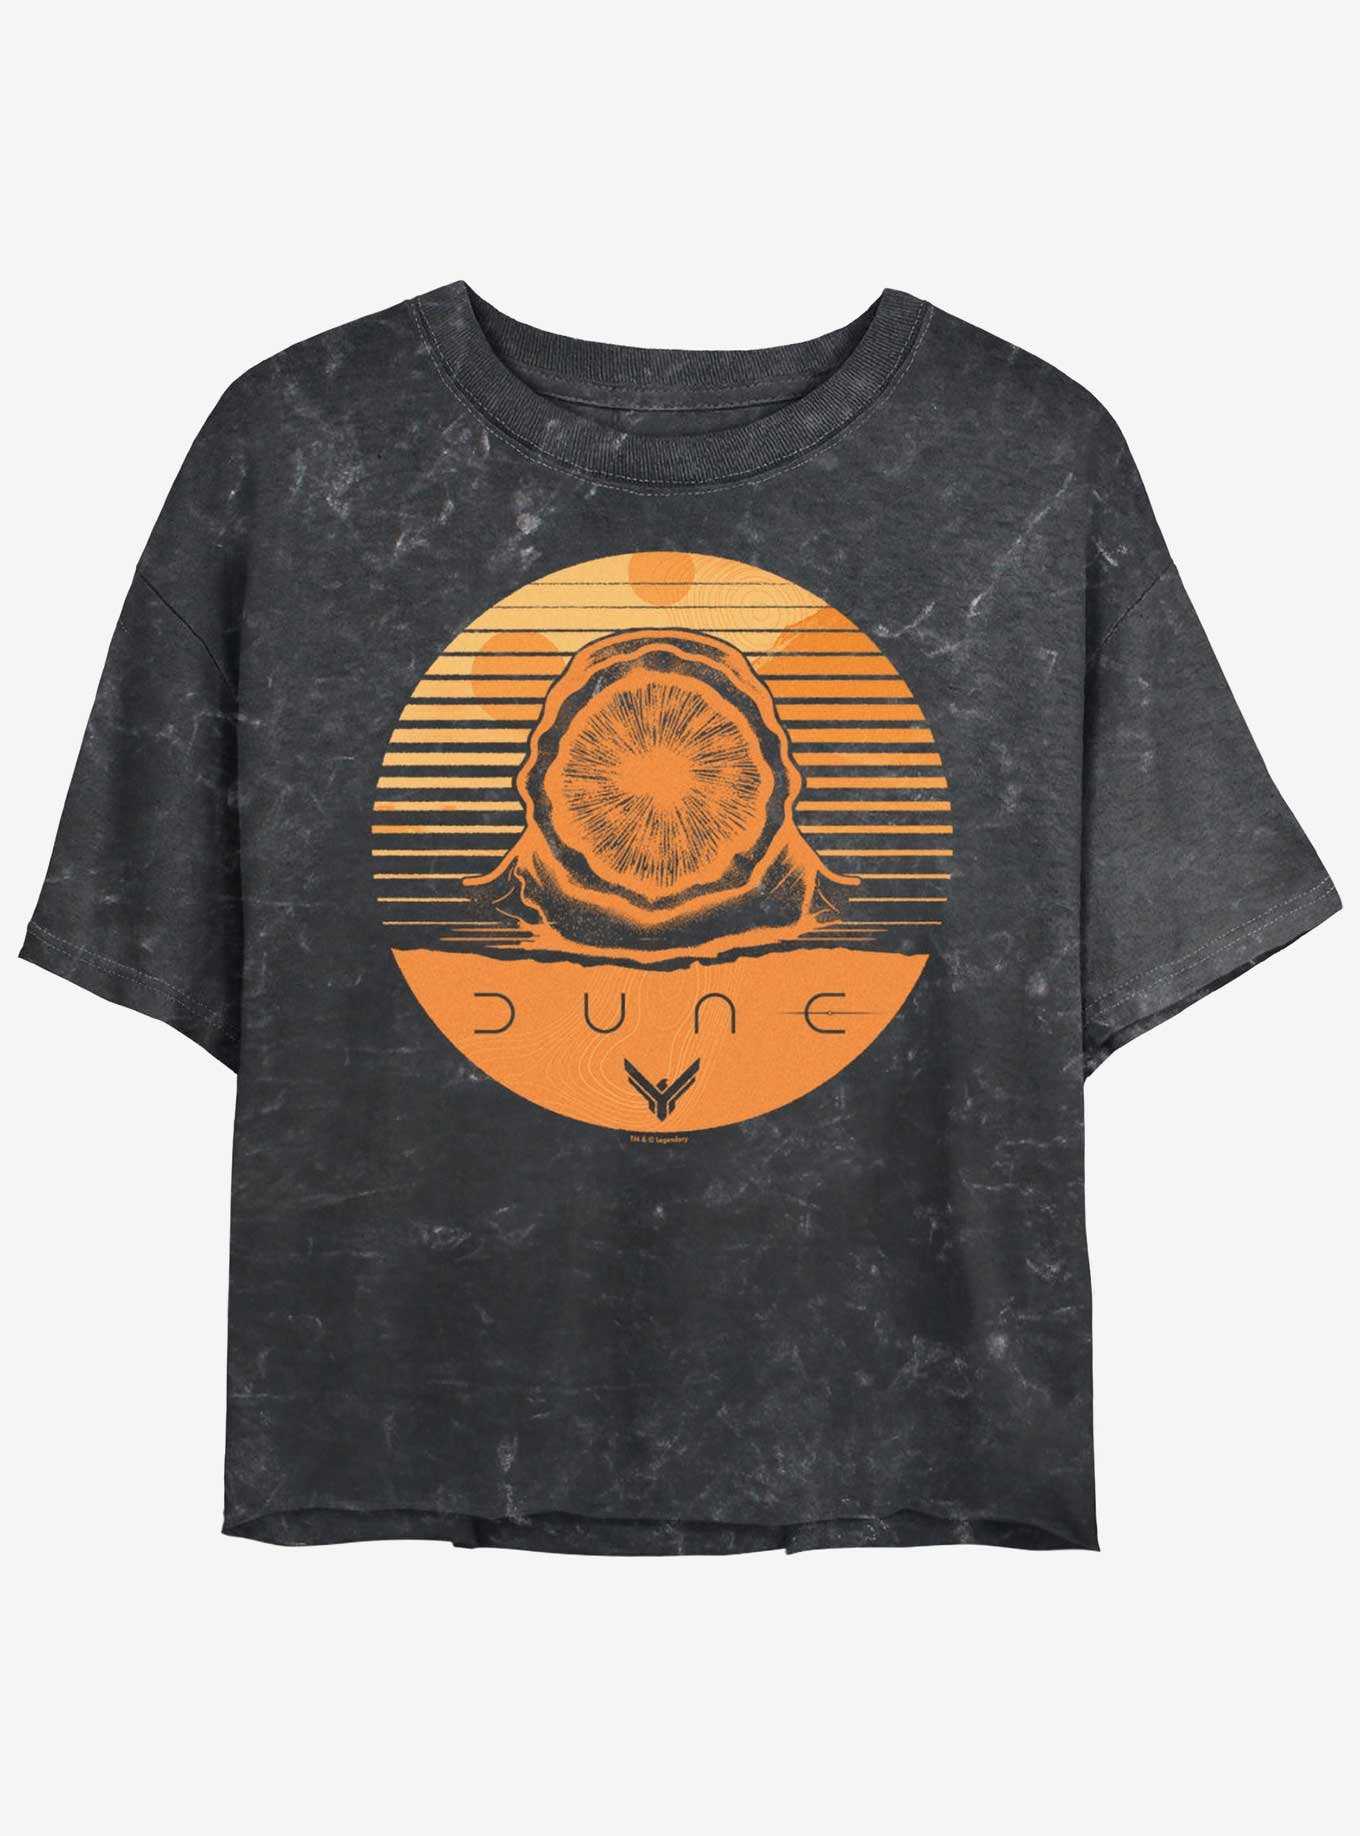 Dune Arrakis Sandworm Stamp Mineral Wash Womens Crop T-Shirt, , hi-res